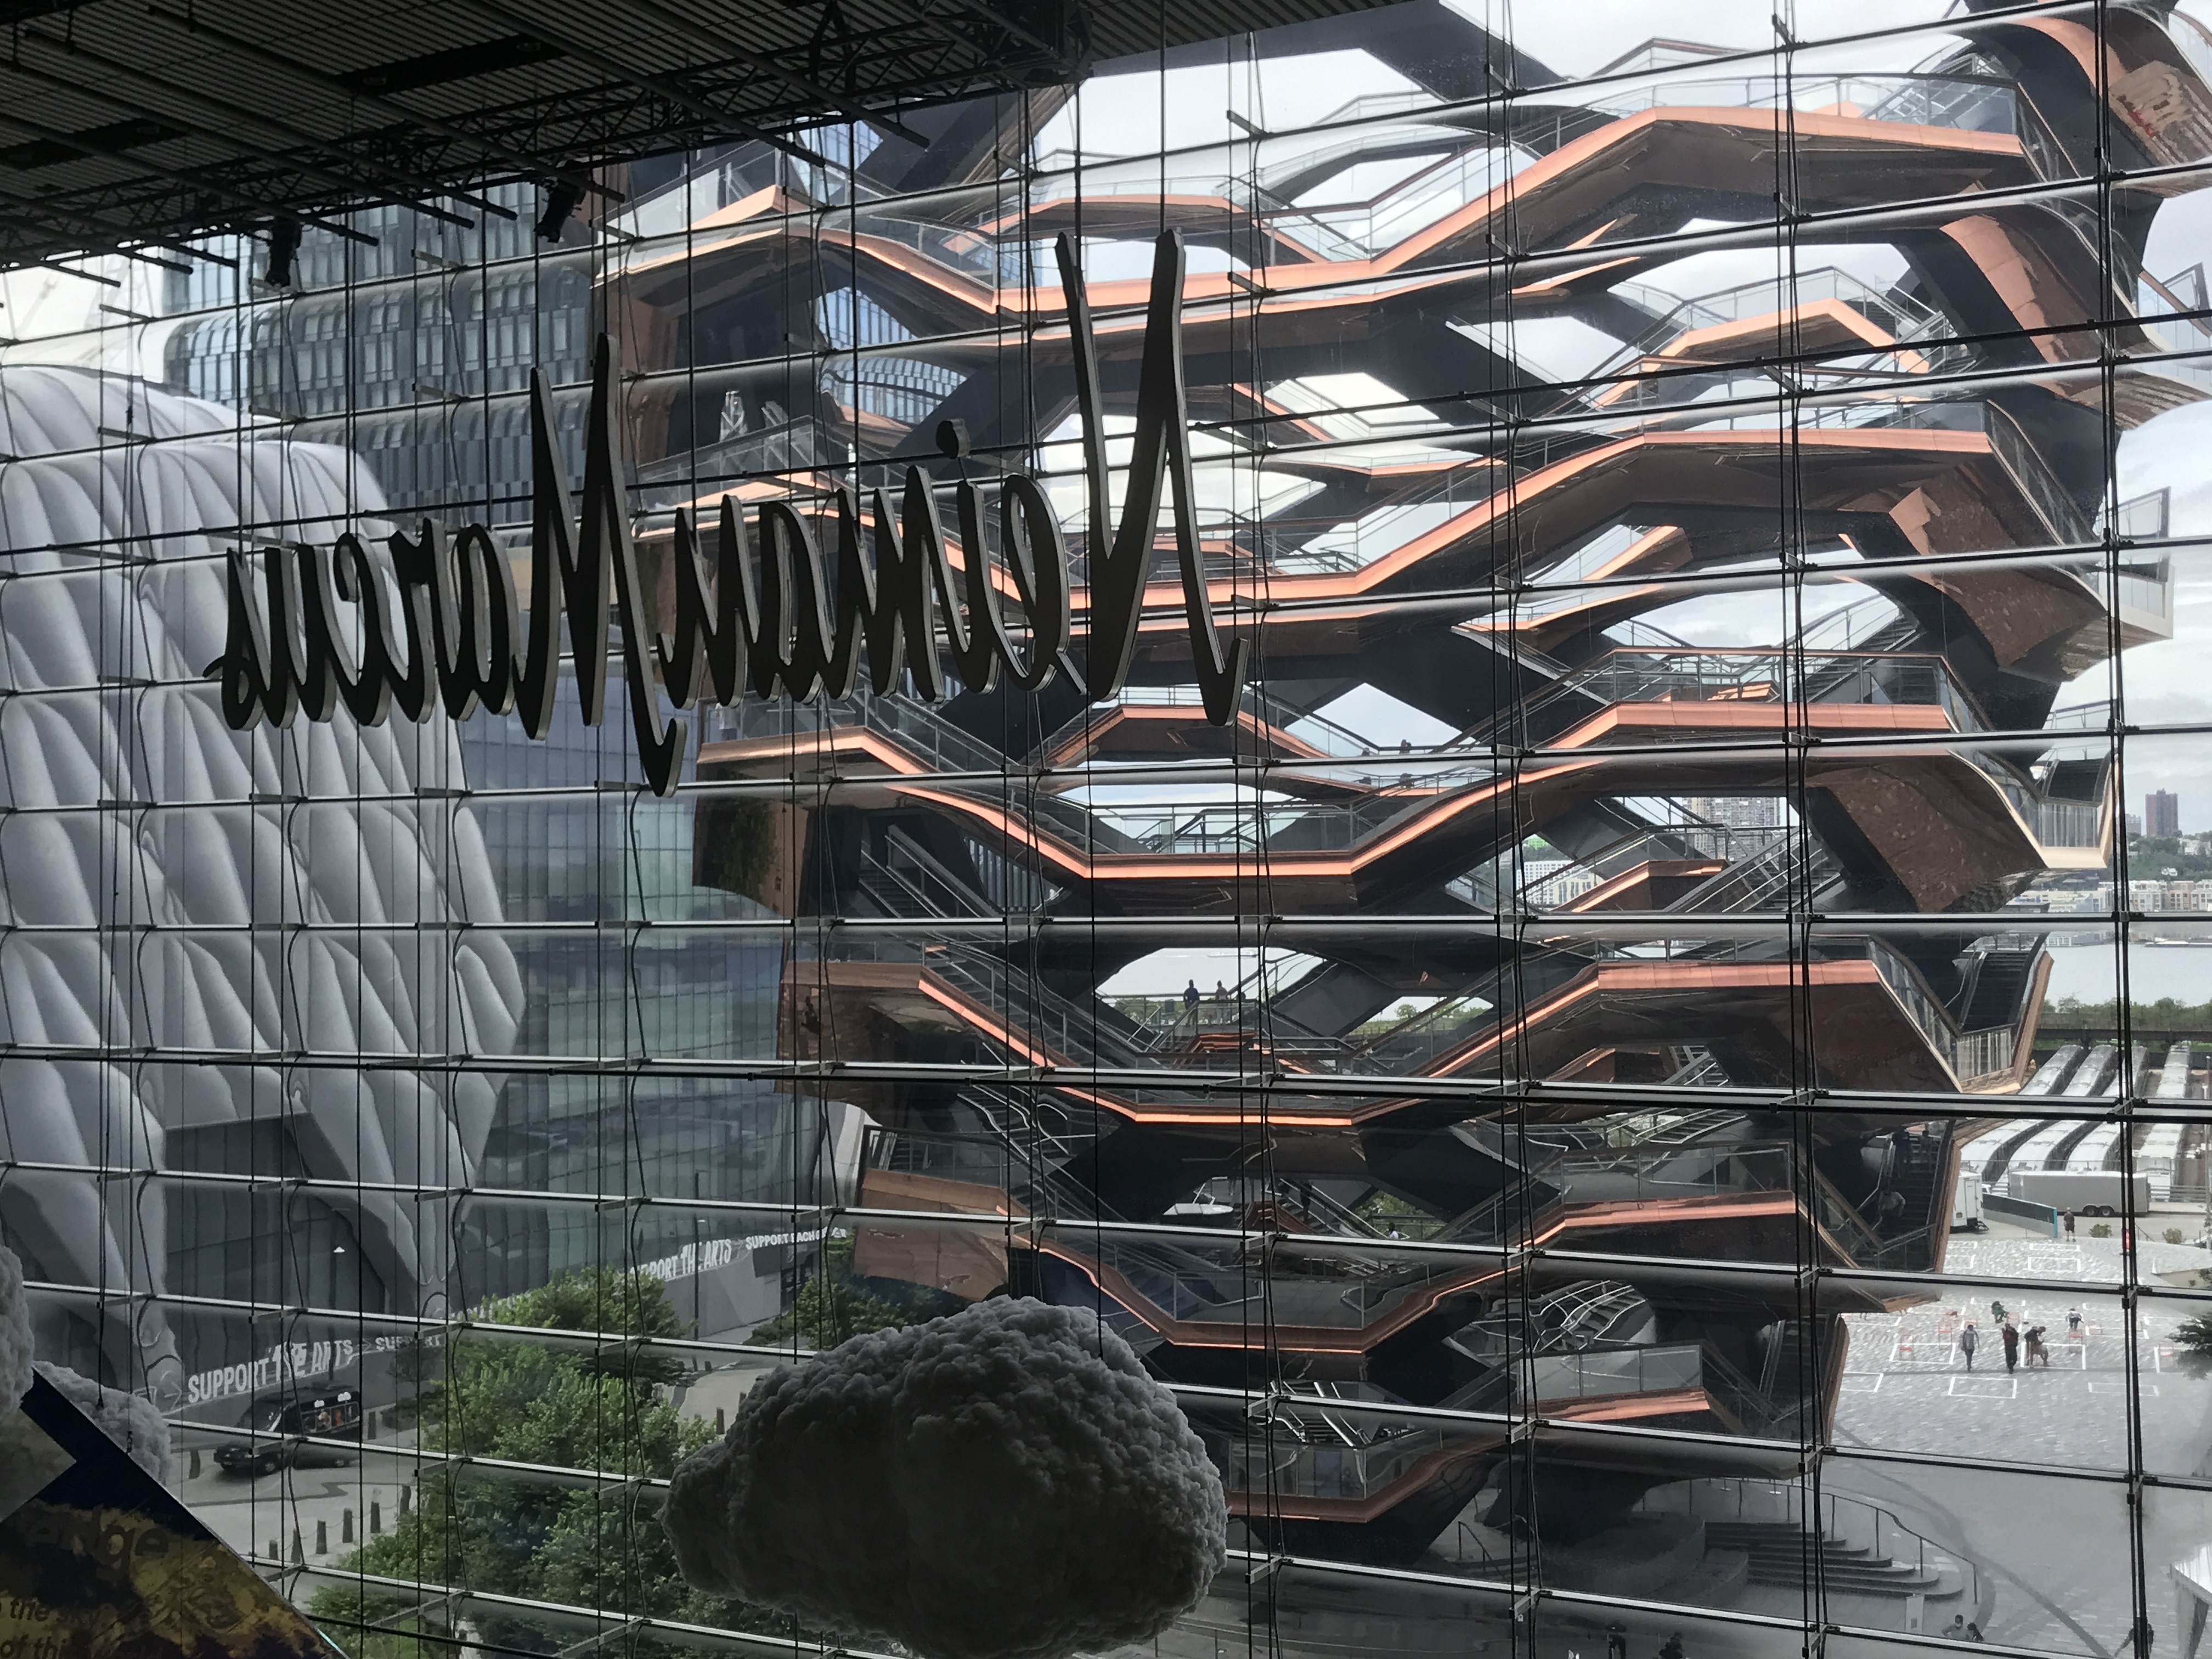 Neiman Marcus to Close Its Store at Manhattan's Hudson Yards - Bloomberg